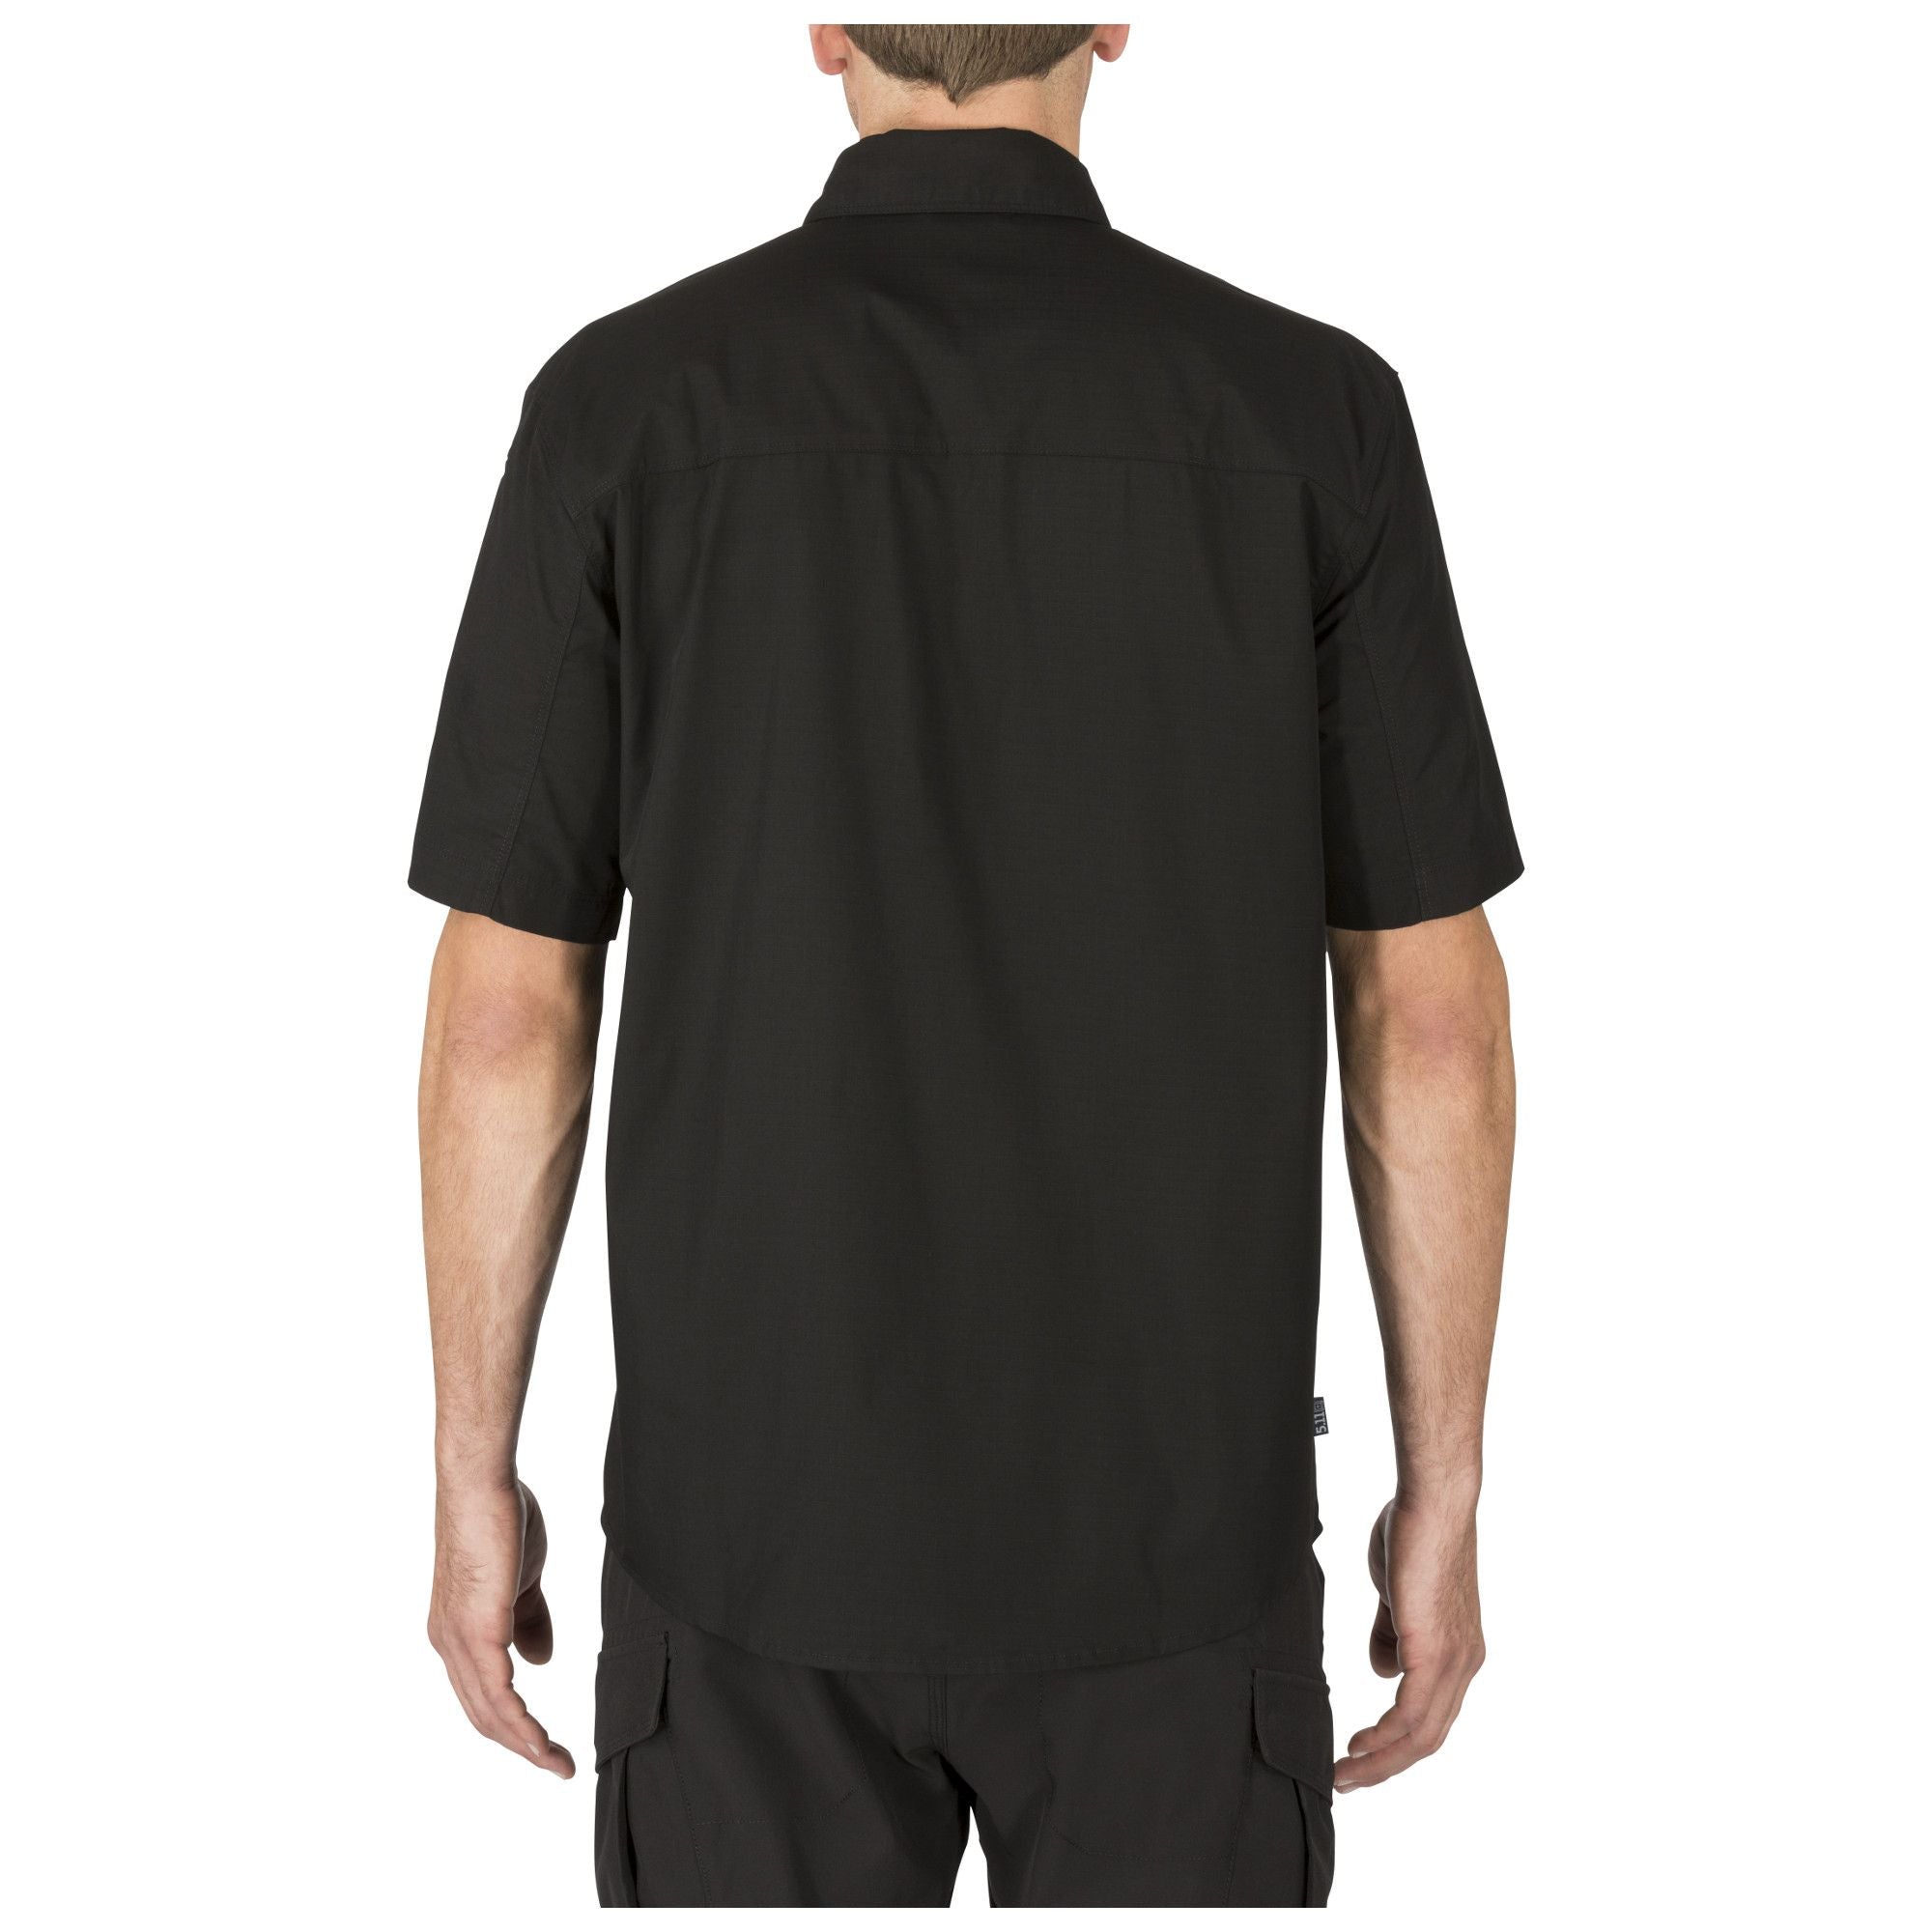 5.11 Tactical Stryke Short Sleeve Shirts Black Shirts 5.11 Tactical Tactical Gear Supplier Tactical Distributors Australia